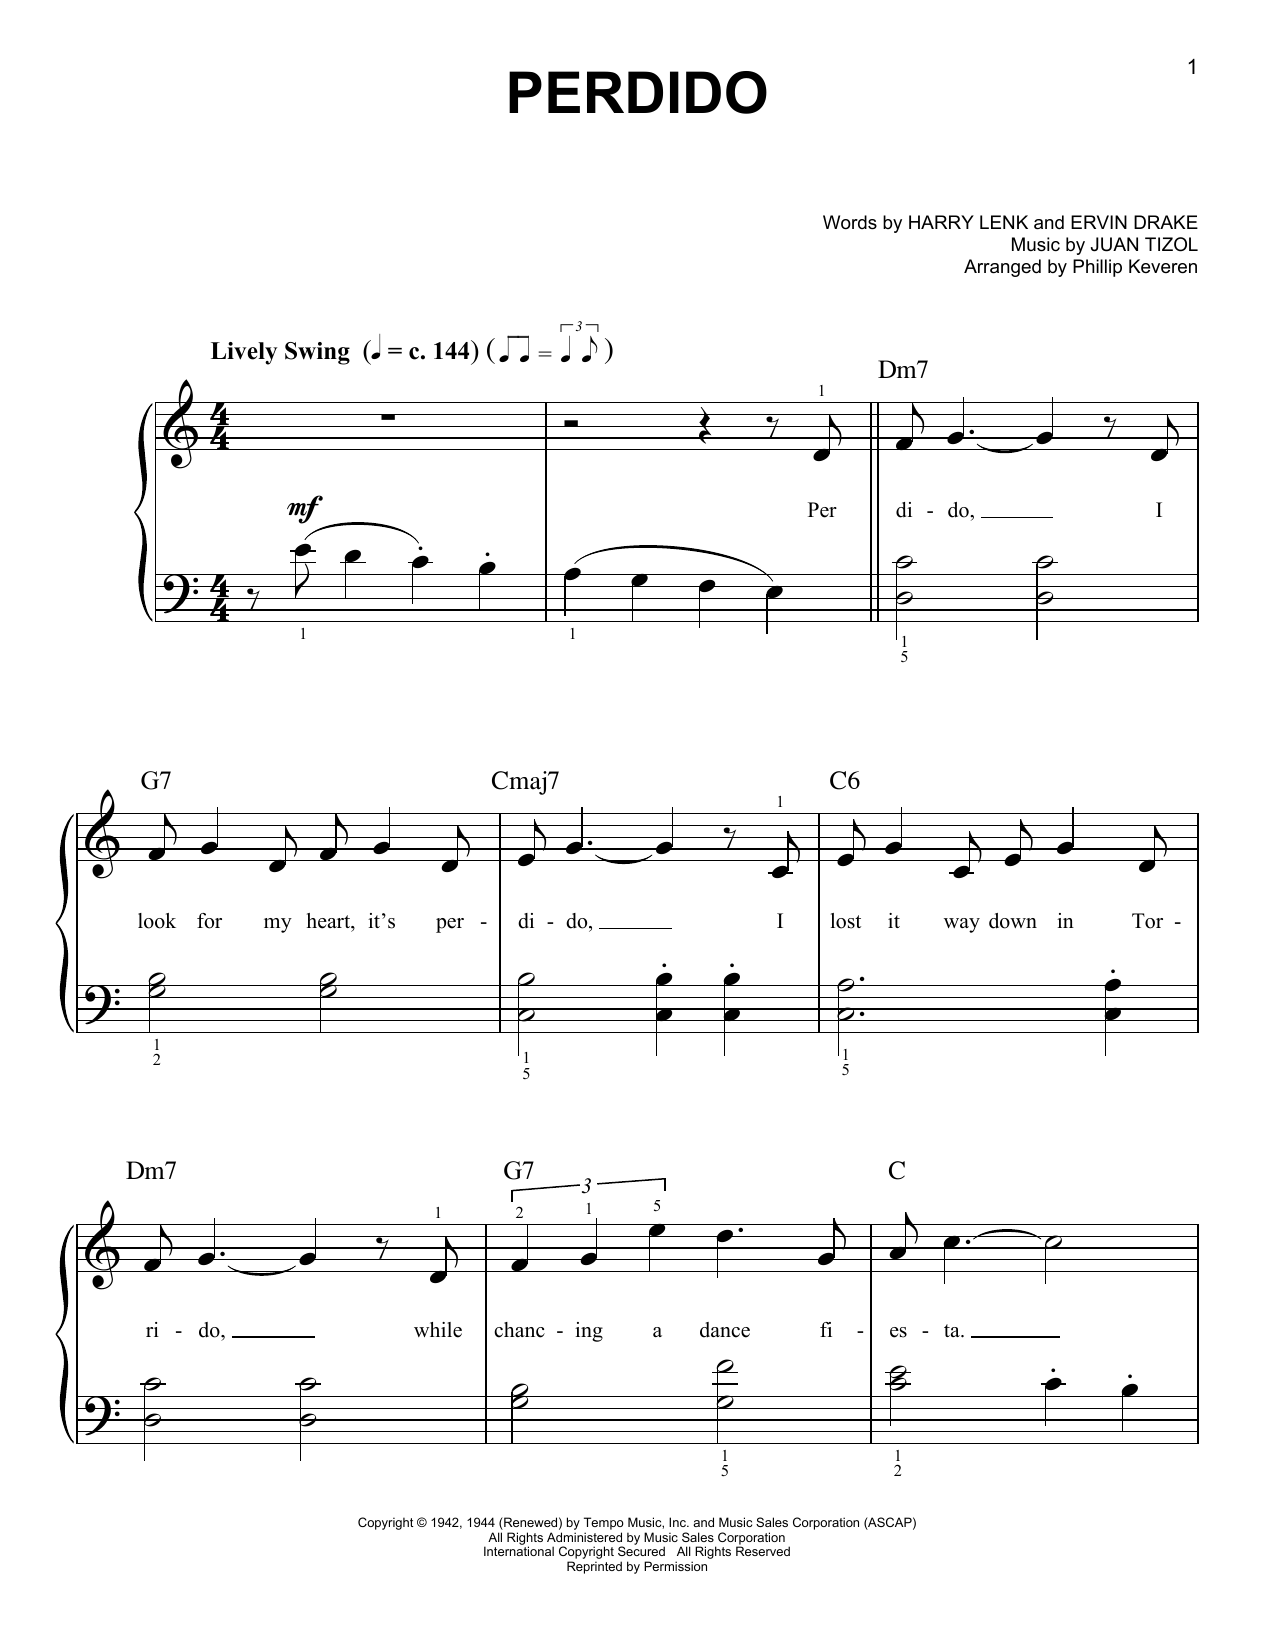 Duke Ellington Perdido (arr. Phillip Keveren) Sheet Music Notes & Chords for Easy Piano - Download or Print PDF